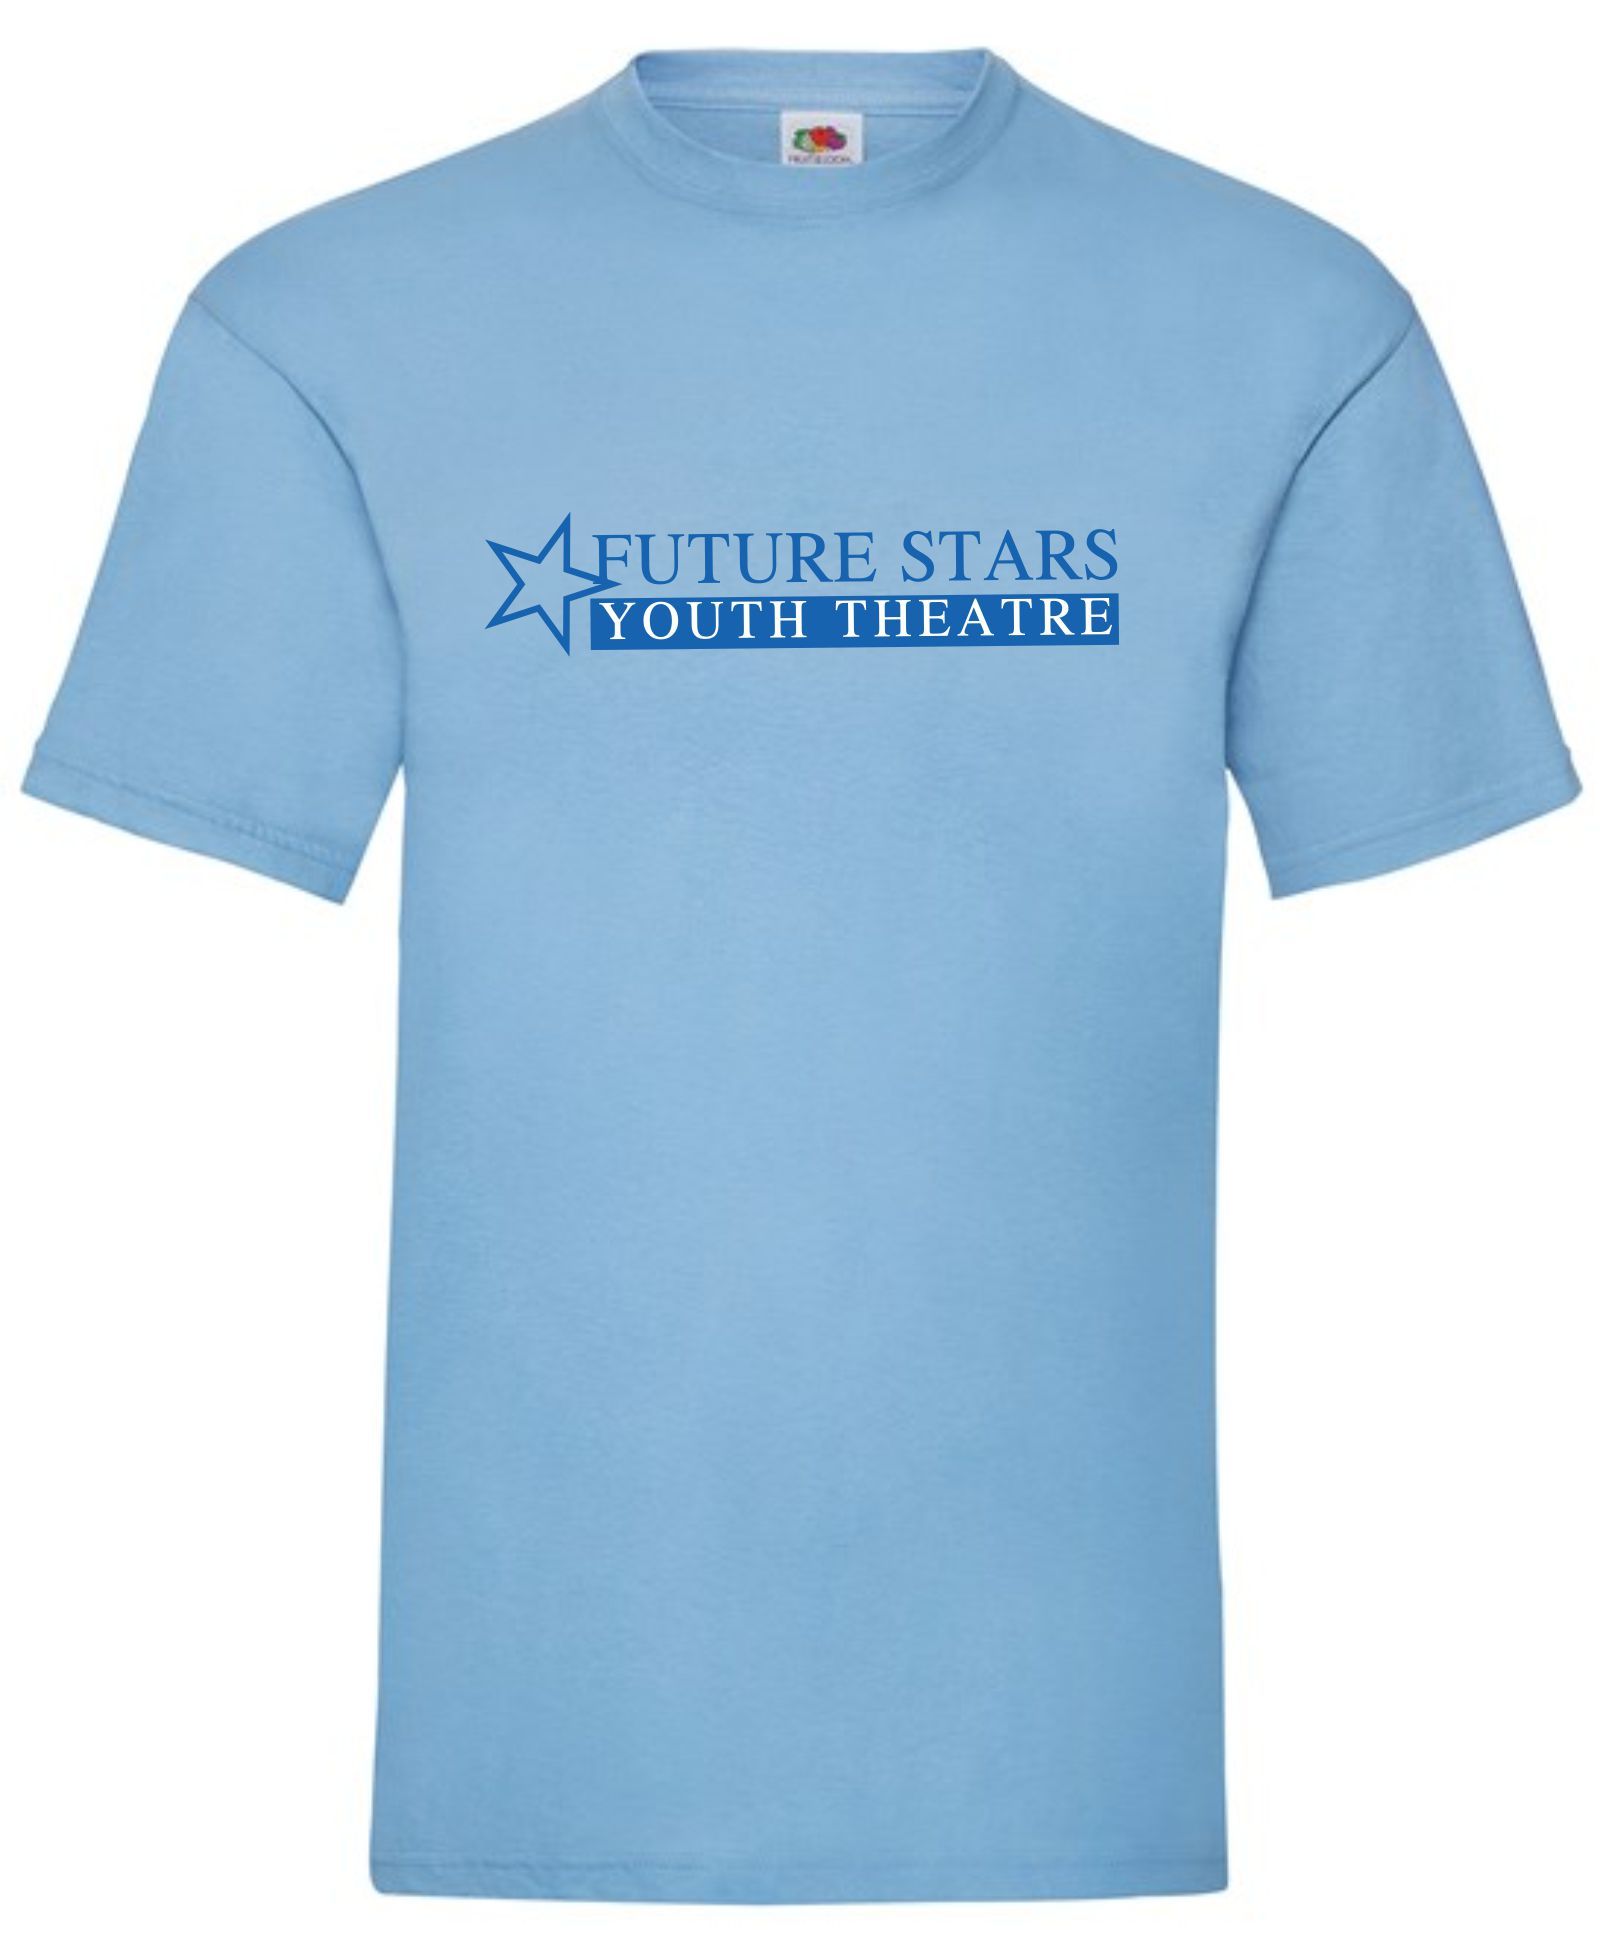 Future Stars Youth Theatre – T-Shirt (Kids)